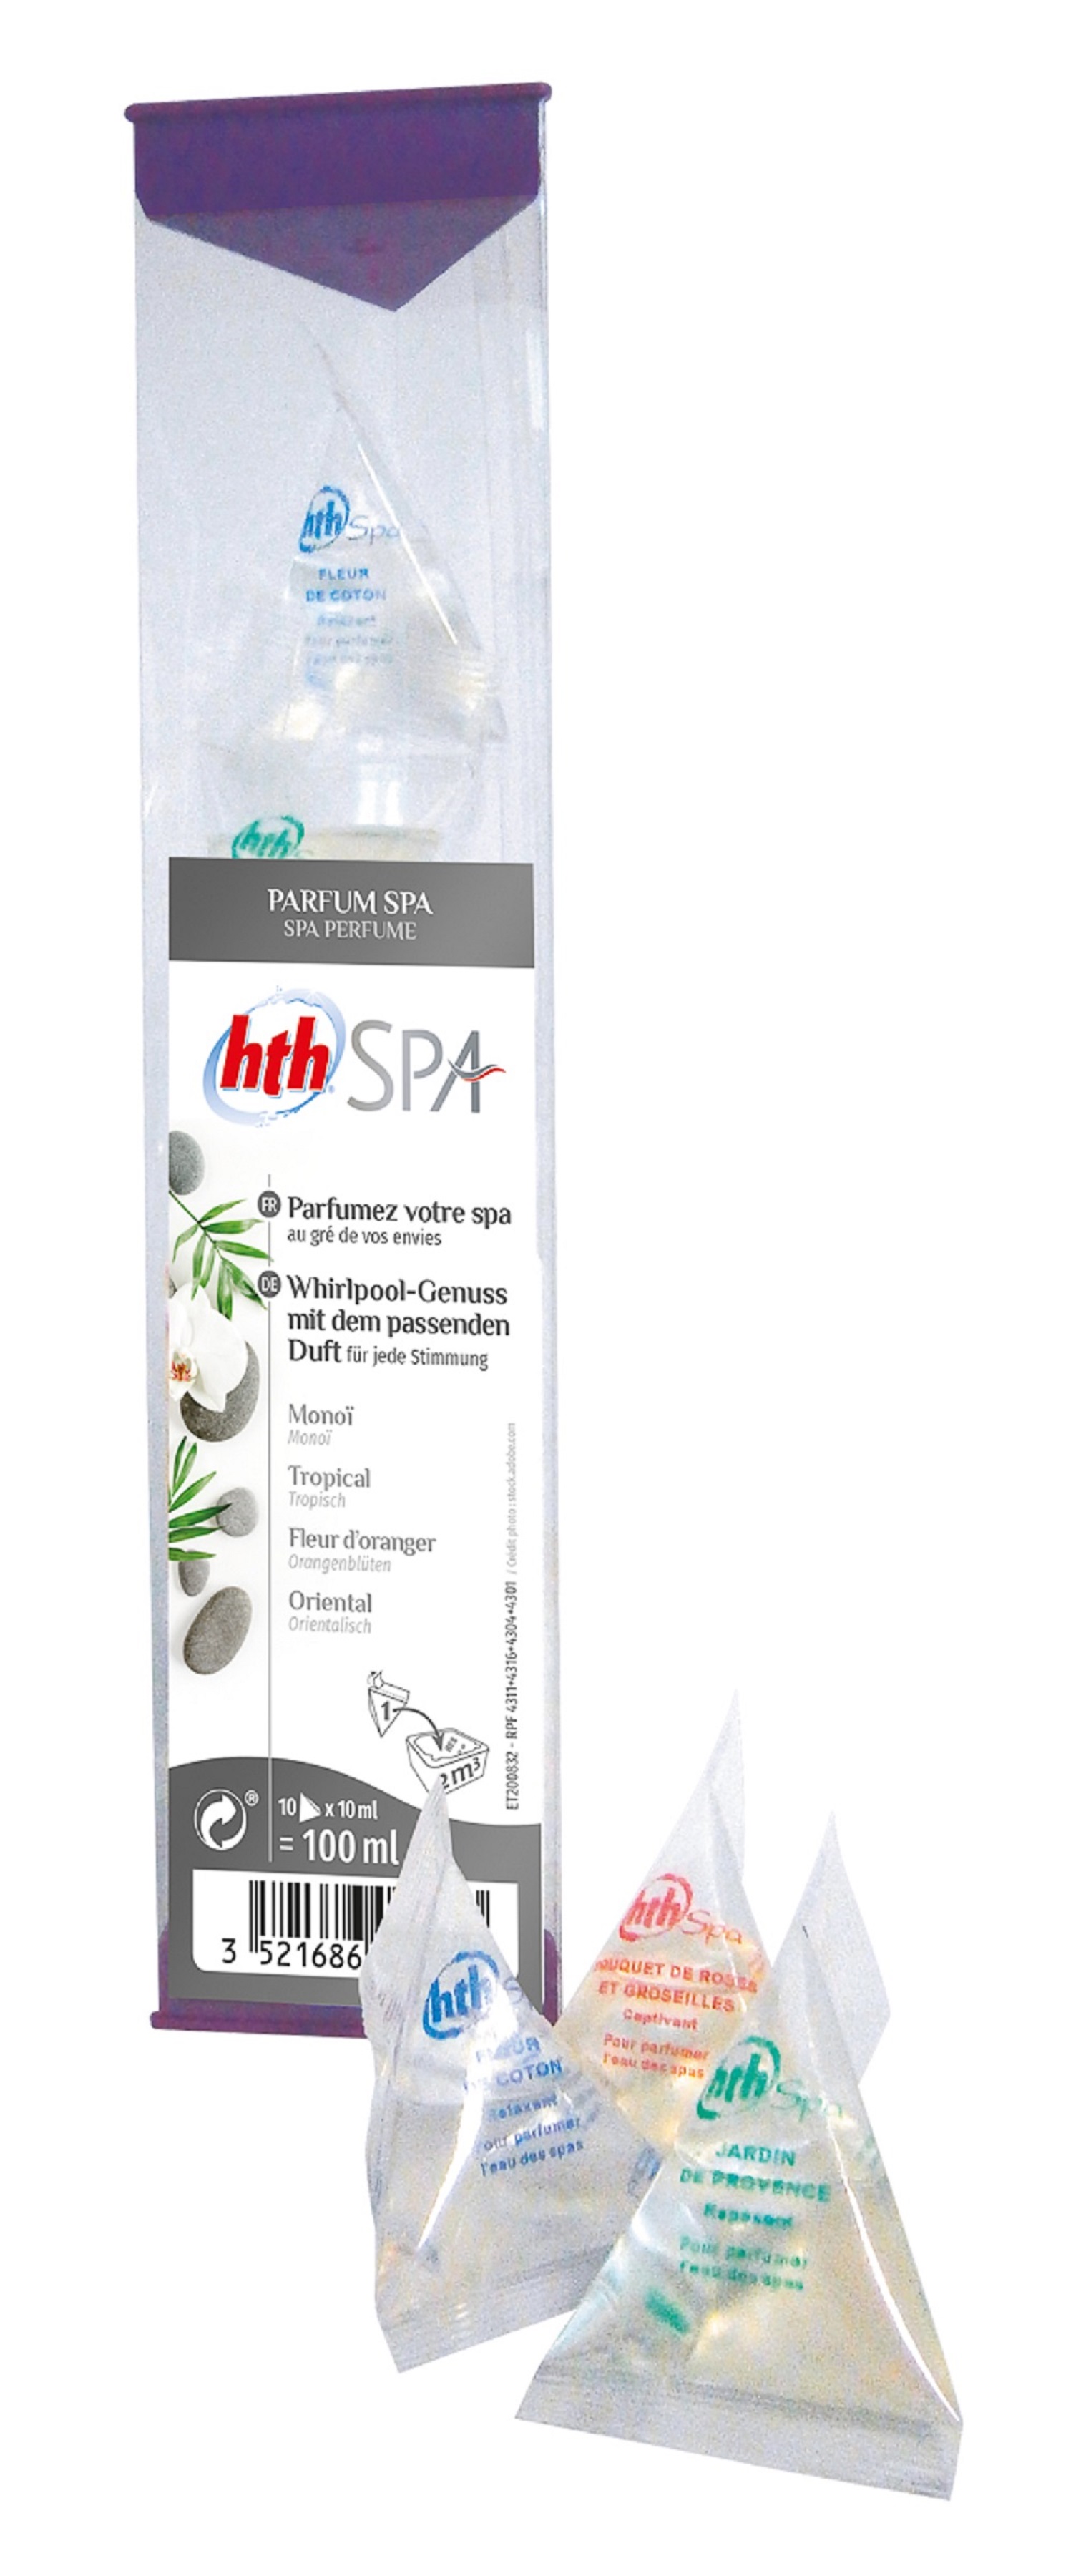 HTH Spa Etui with10 sachets parfum Outdoor-Spa